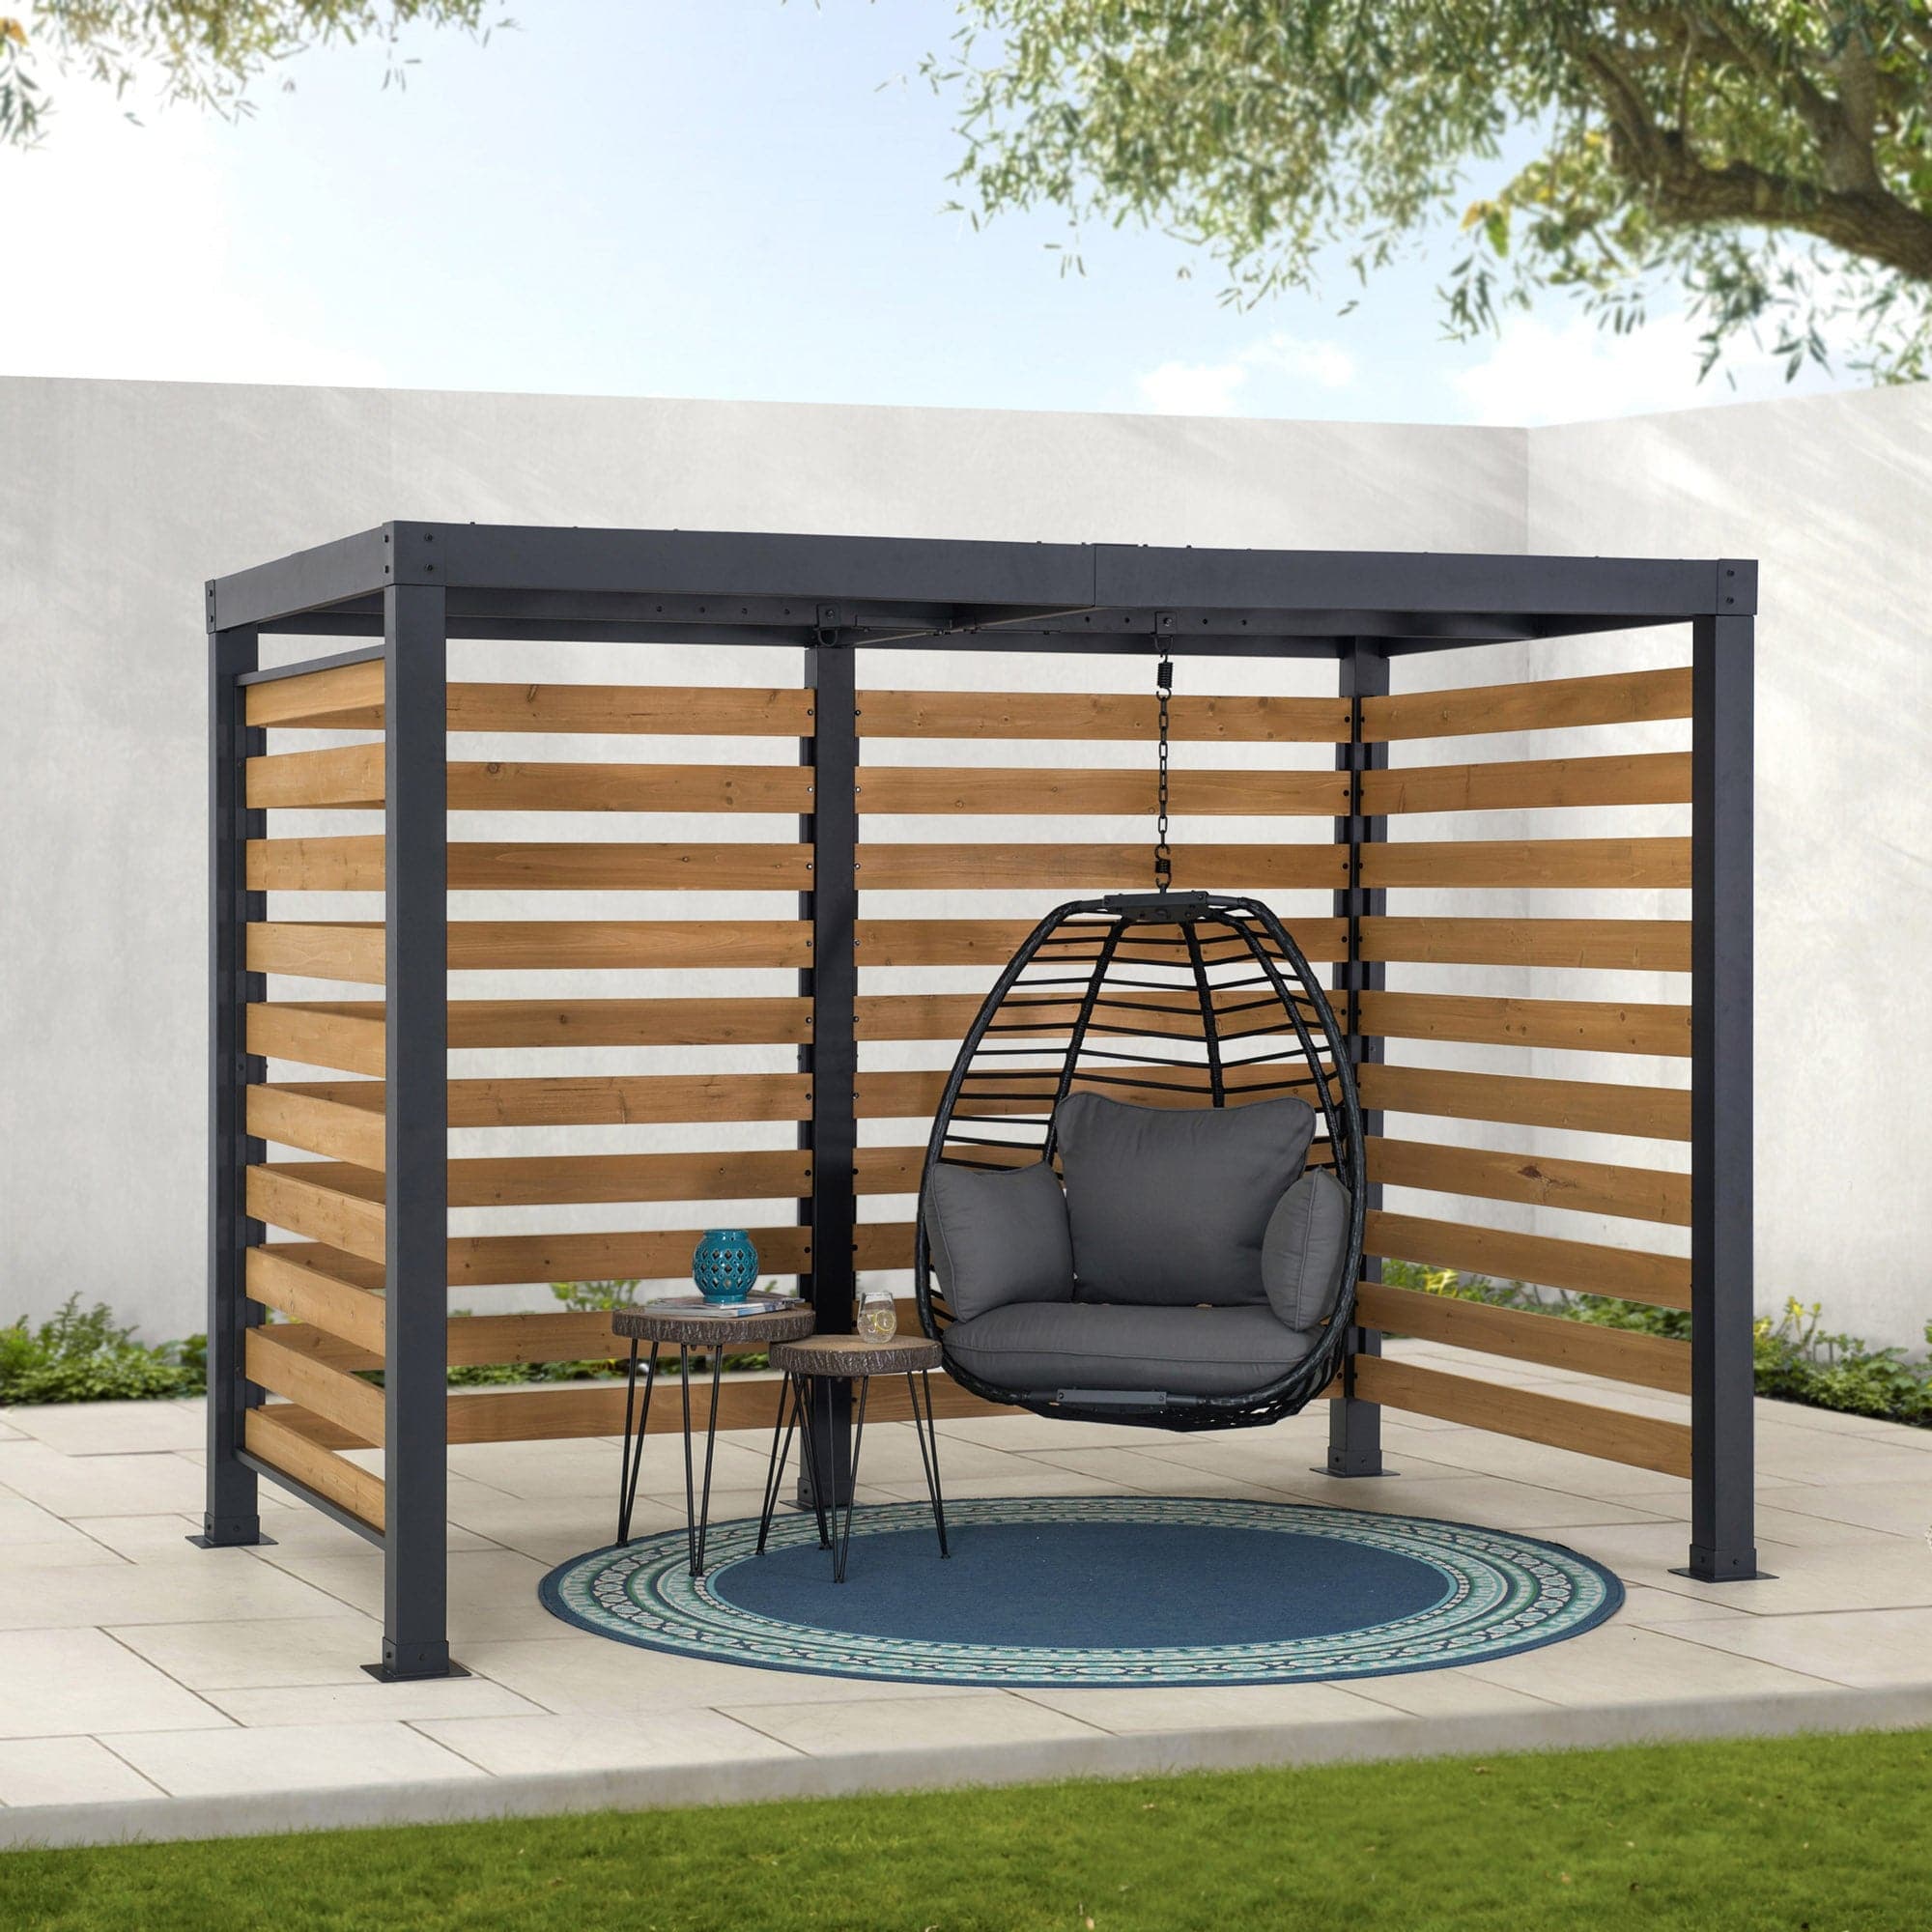 SummerCove Modern Patio 10x6 Metal & Wood Pergola Kits for Outdoor Backyard.